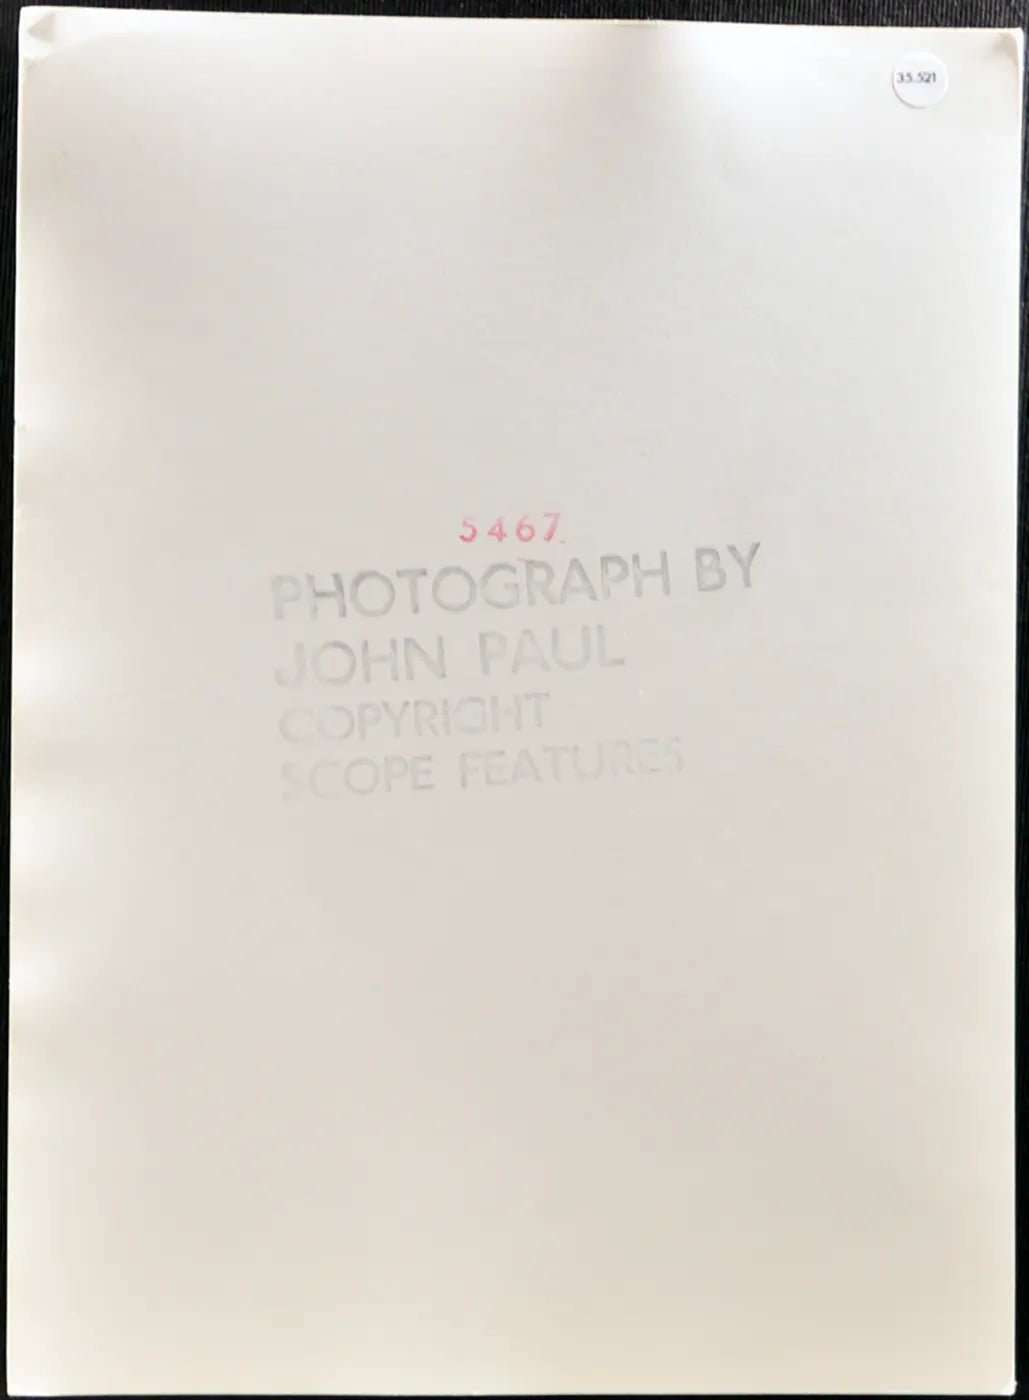 Gillian Duxbury Modella anni 80 Ft 35521 - Stampa 20x25 cm - Farabola Stampa ai sali d'argento